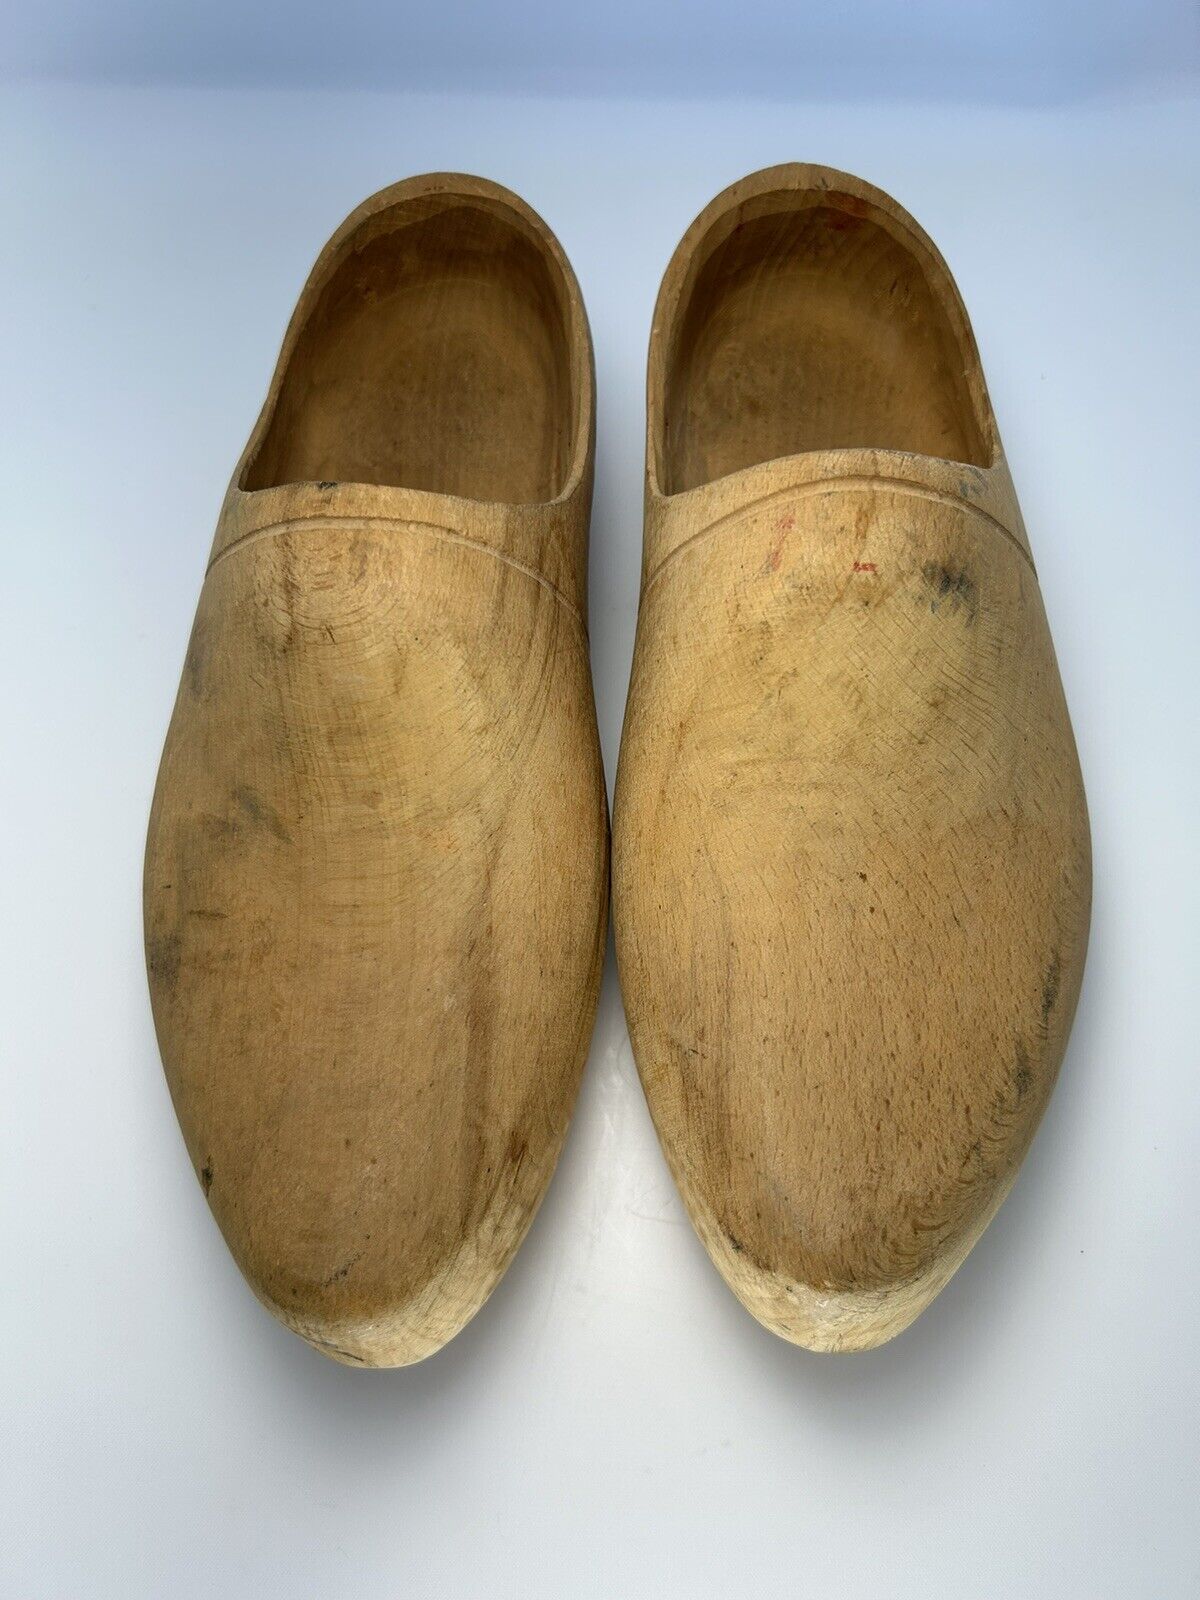 Vintage Hand Carved Dutch Wooden Shoes/Clogs Unpainted Women\'s Size US 7.5